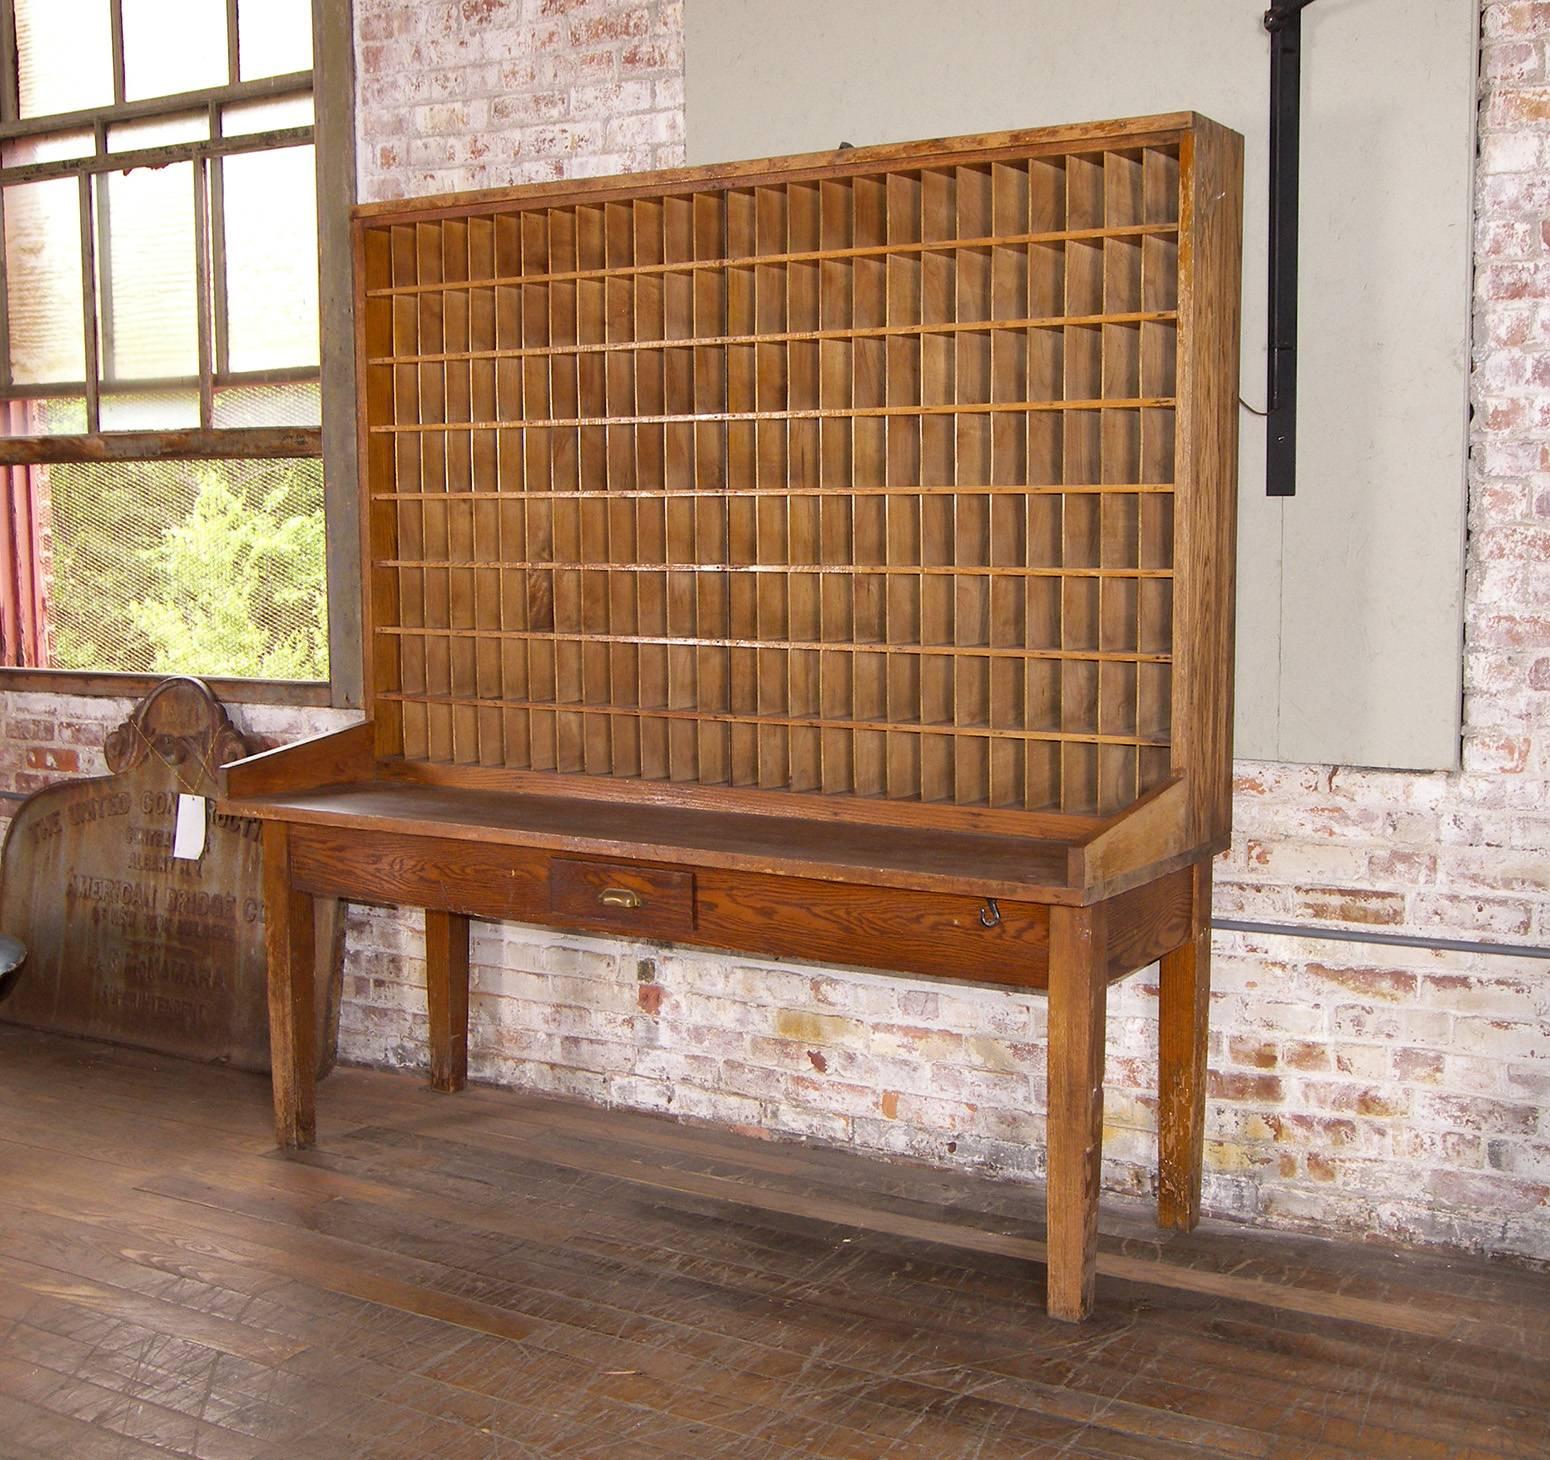 North American Antique Industrial Wood Postal Sorting Desk Storage Post Office Side Table